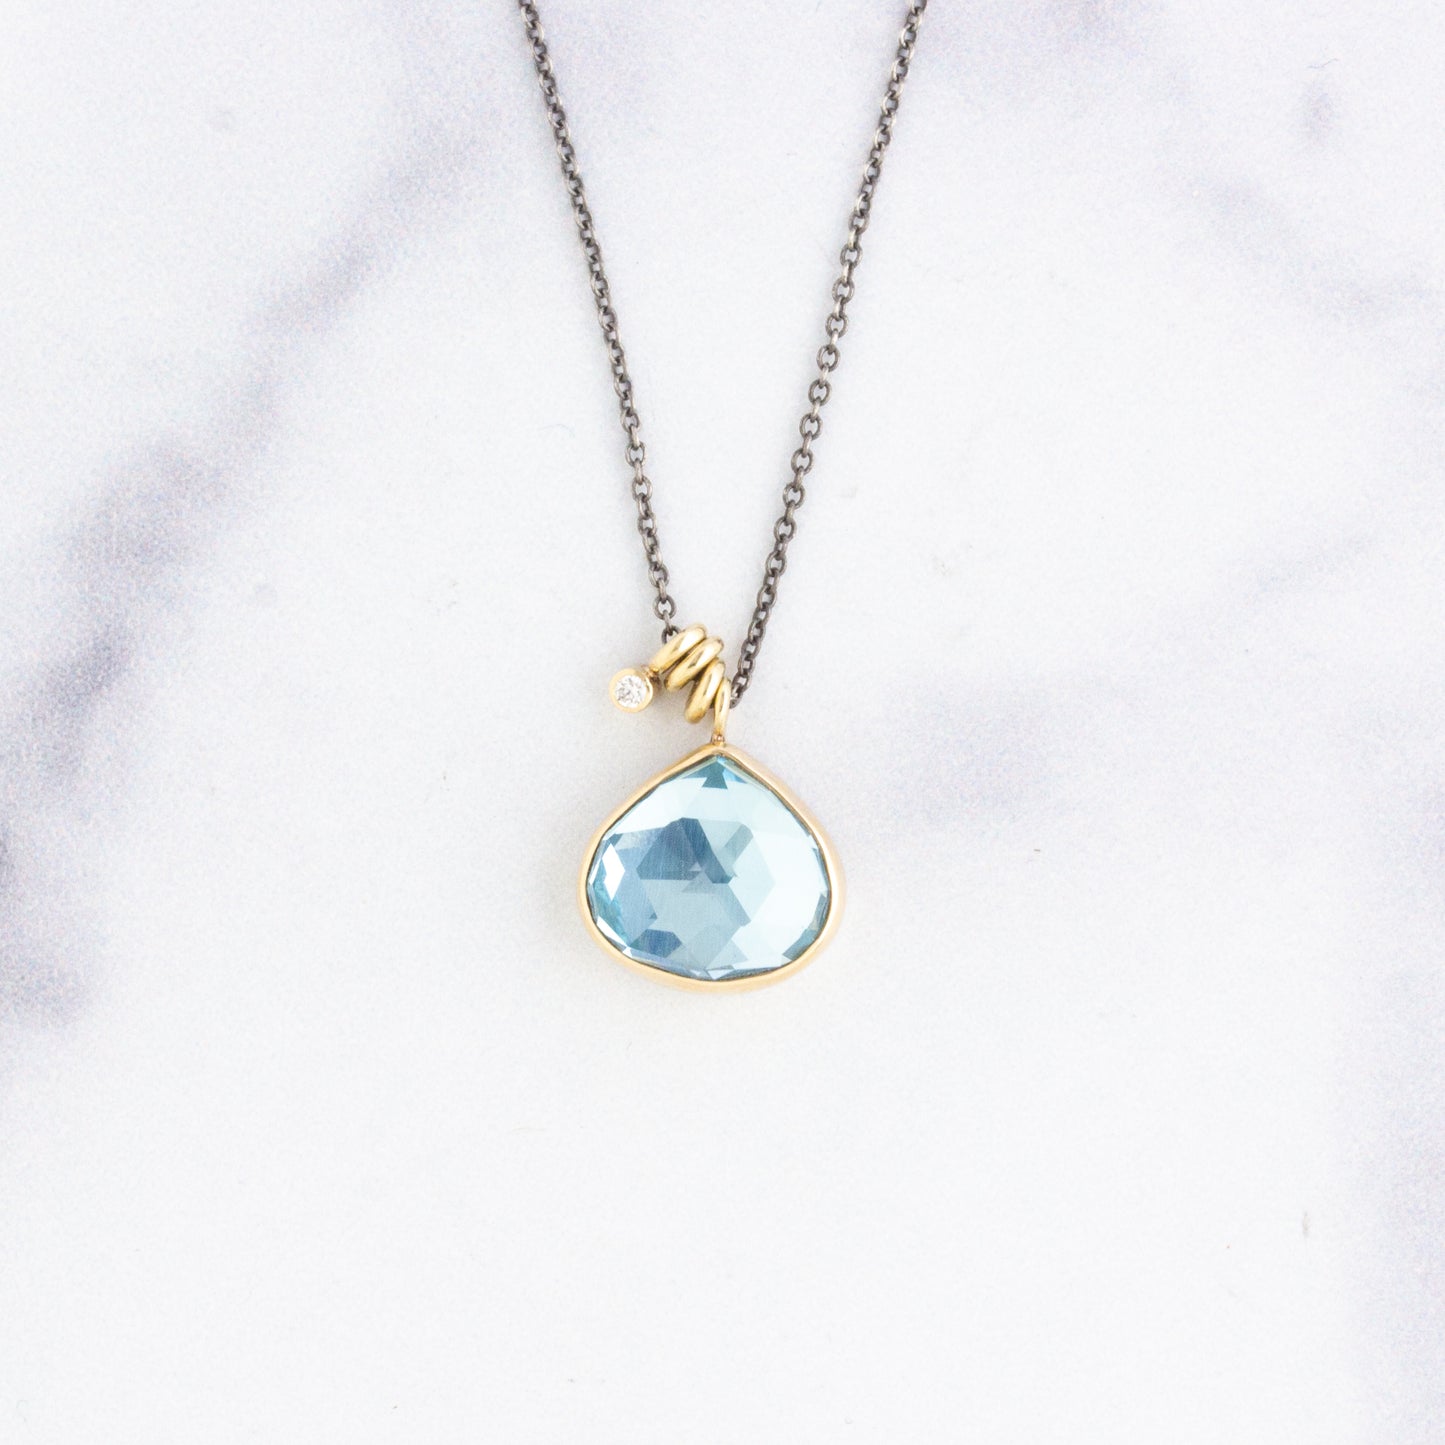 Oxidized Sterling & 14K Gold Small Sky Blue Topaz & Diamond Necklace